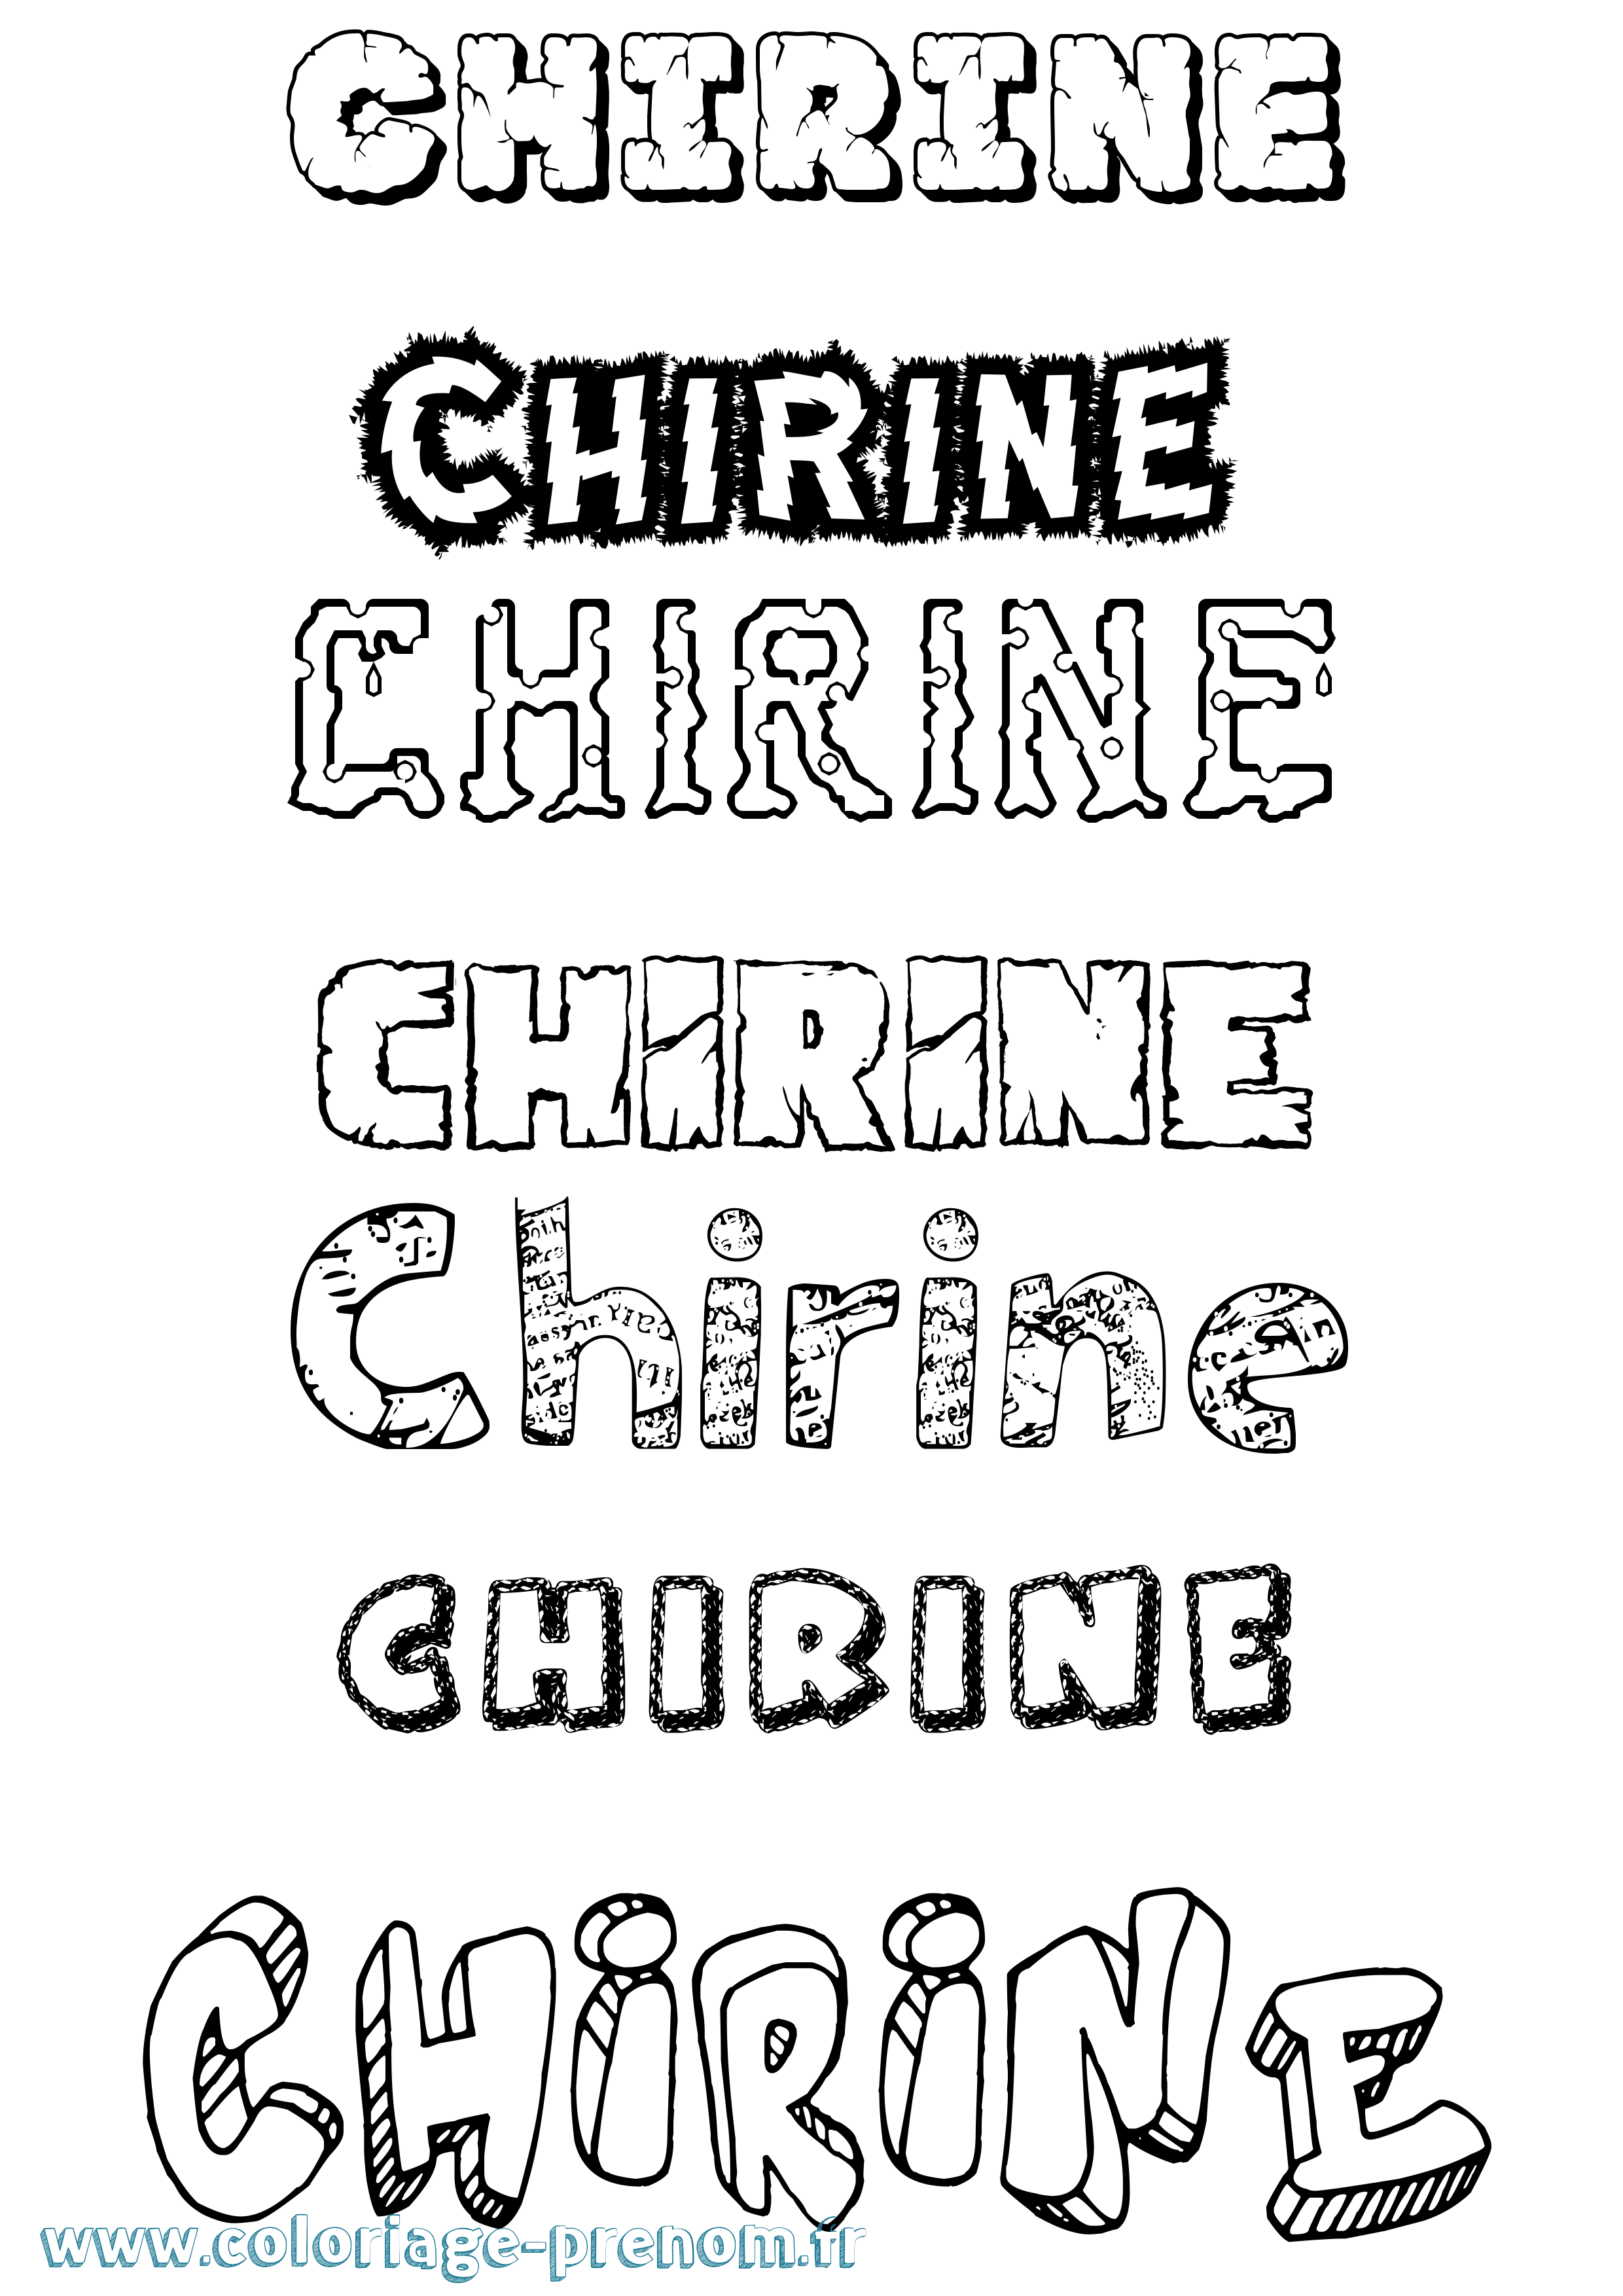 Coloriage prénom Chirine